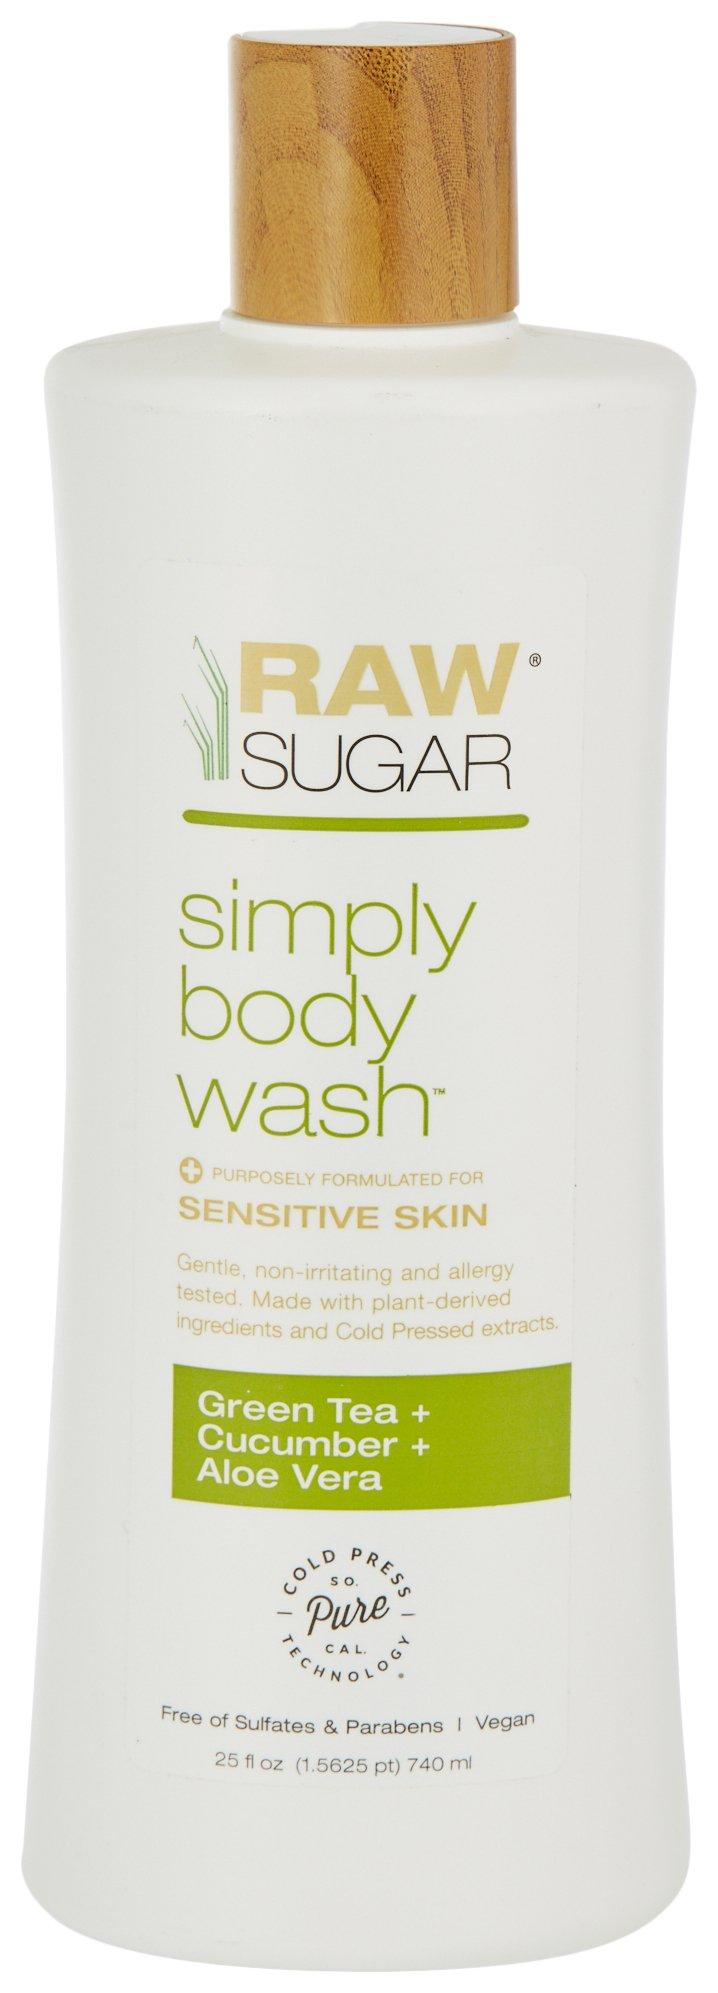 Sensitive Skin Simply Body Wash